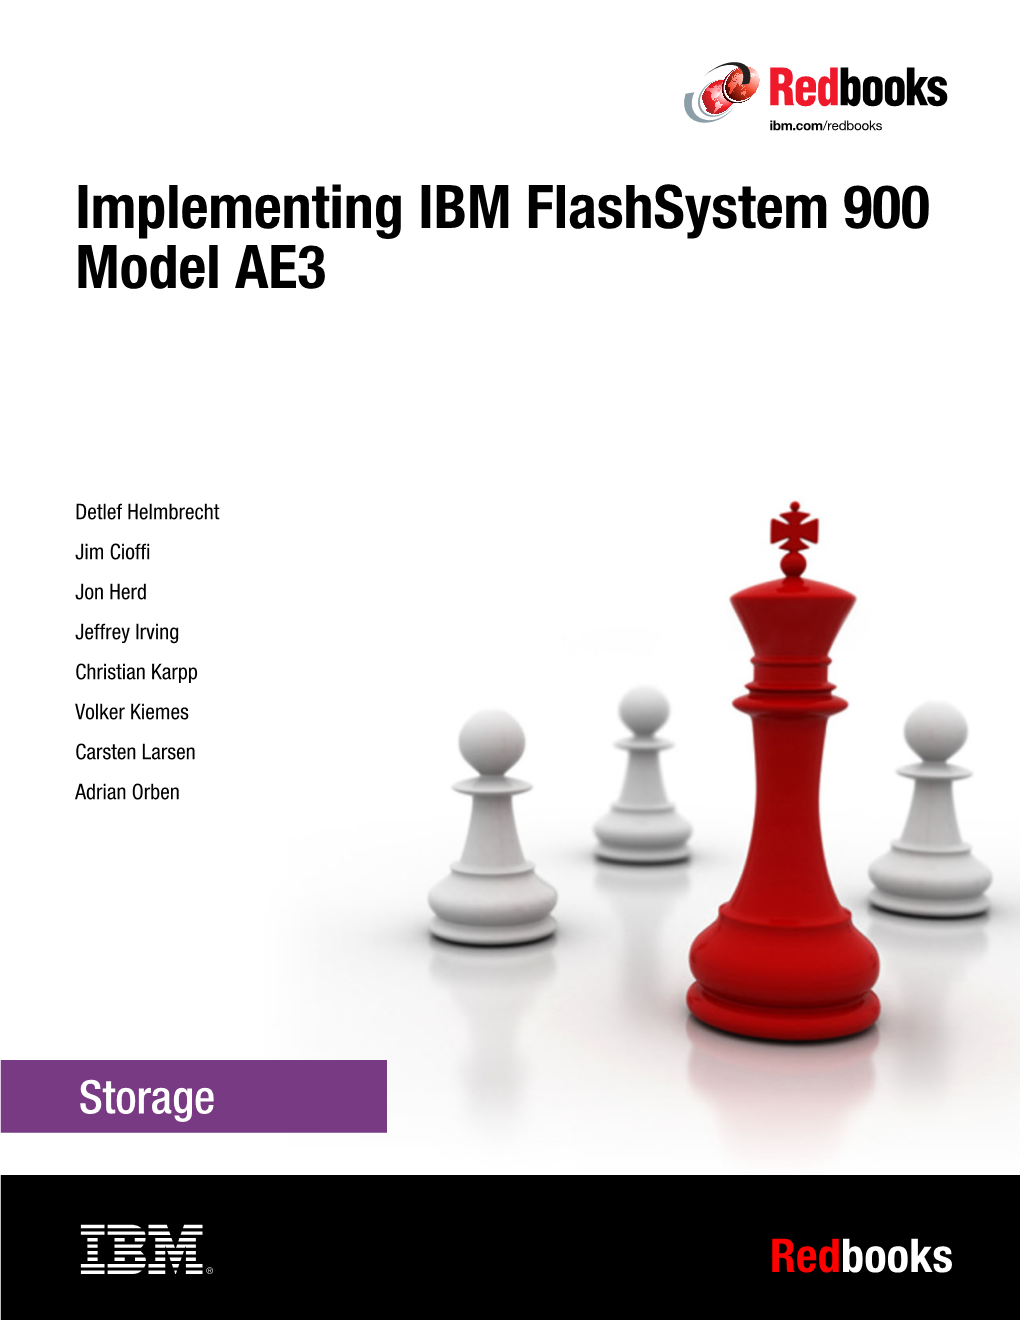 Implementing IBM Flashsystem 900 Model AE3